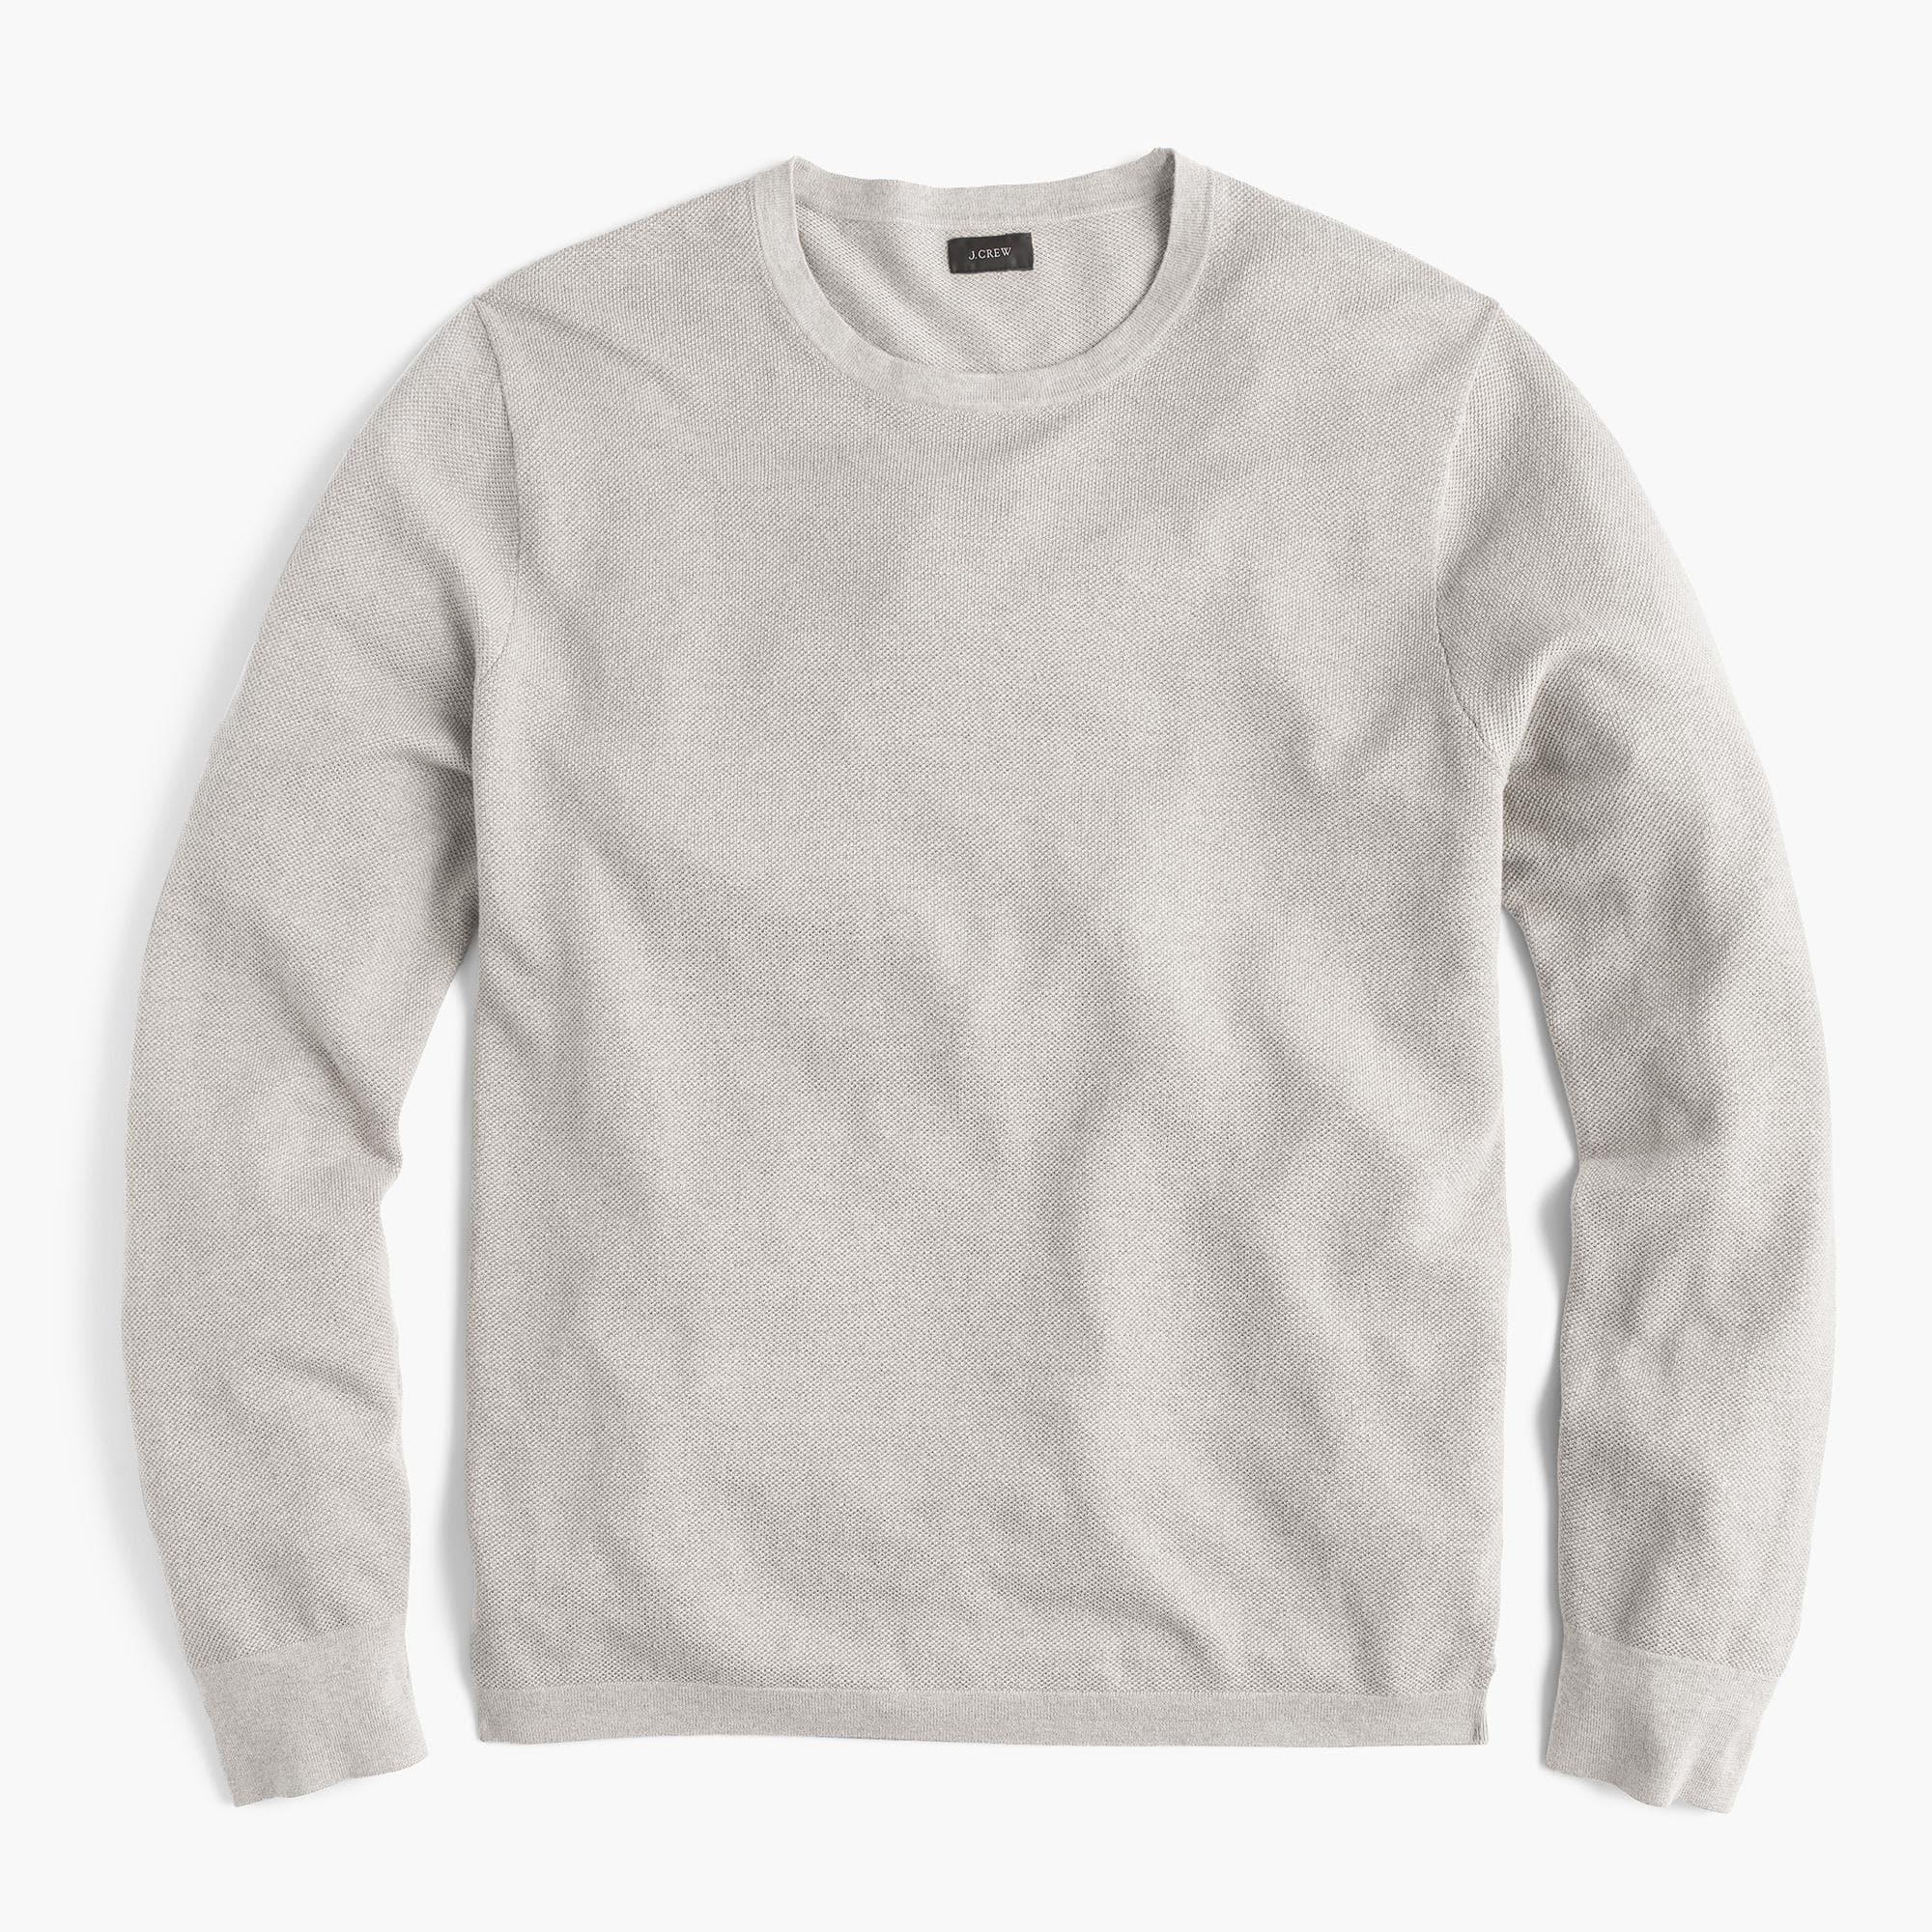 J.Crew Cotton-cashmere Piqué Crewneck Sweater in Gray for Men - Lyst